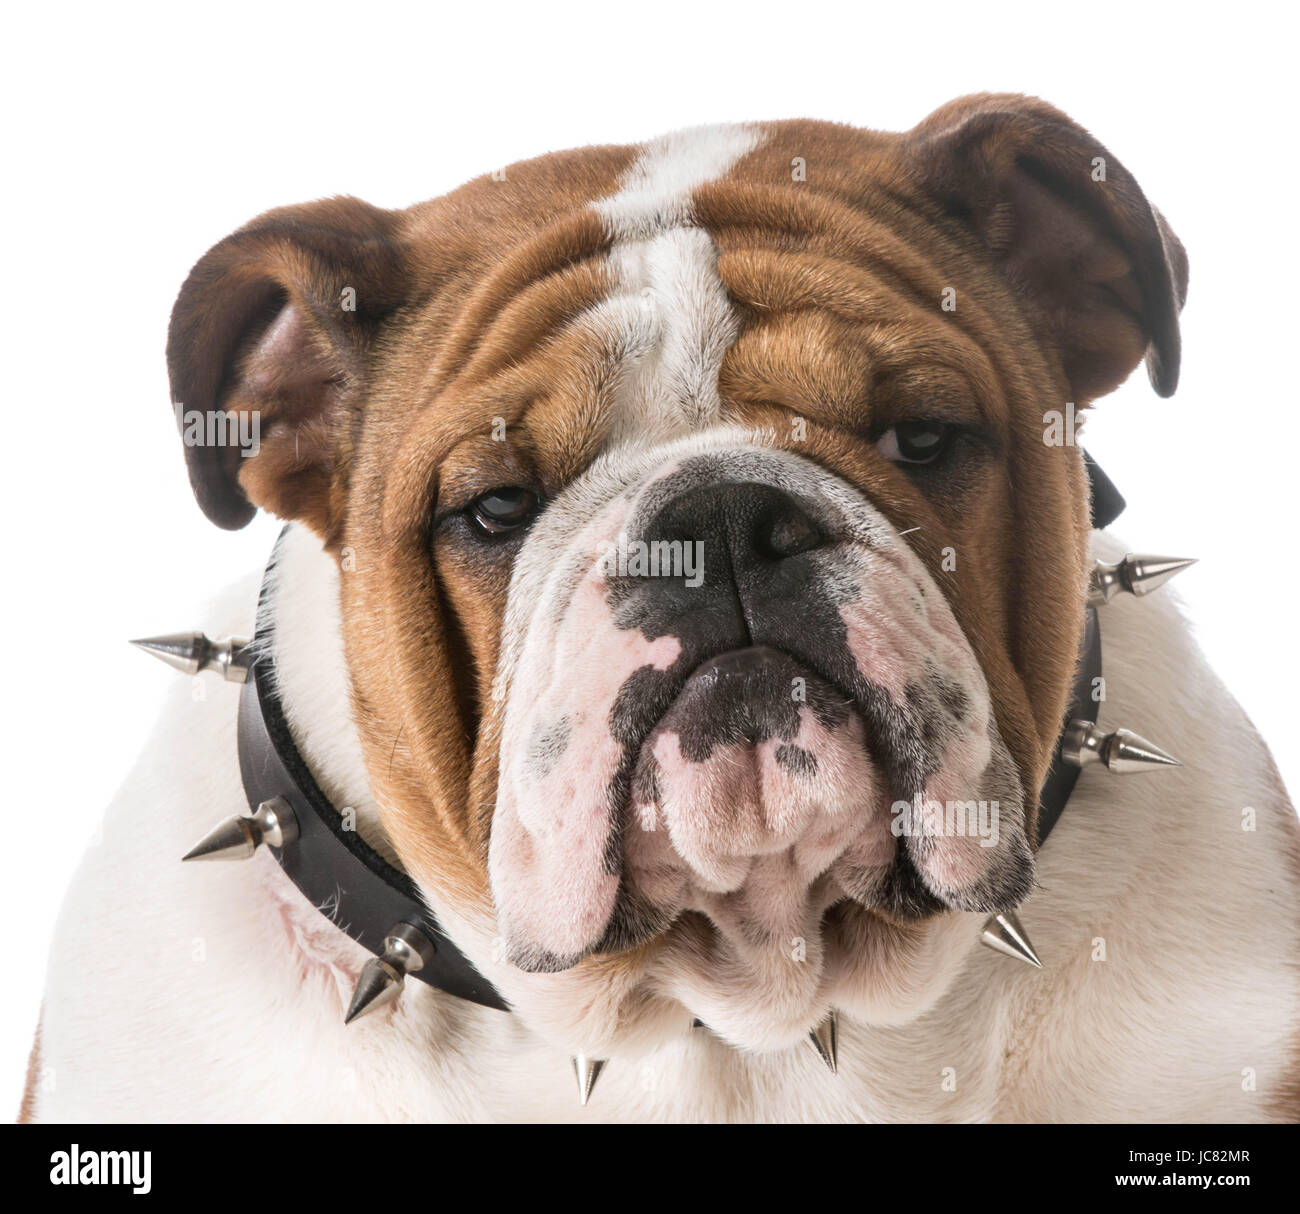 https://c8.alamy.com/comp/JC82MR/english-bulldog-puppy-wearing-spike-collar-on-white-background-JC82MR.jpg